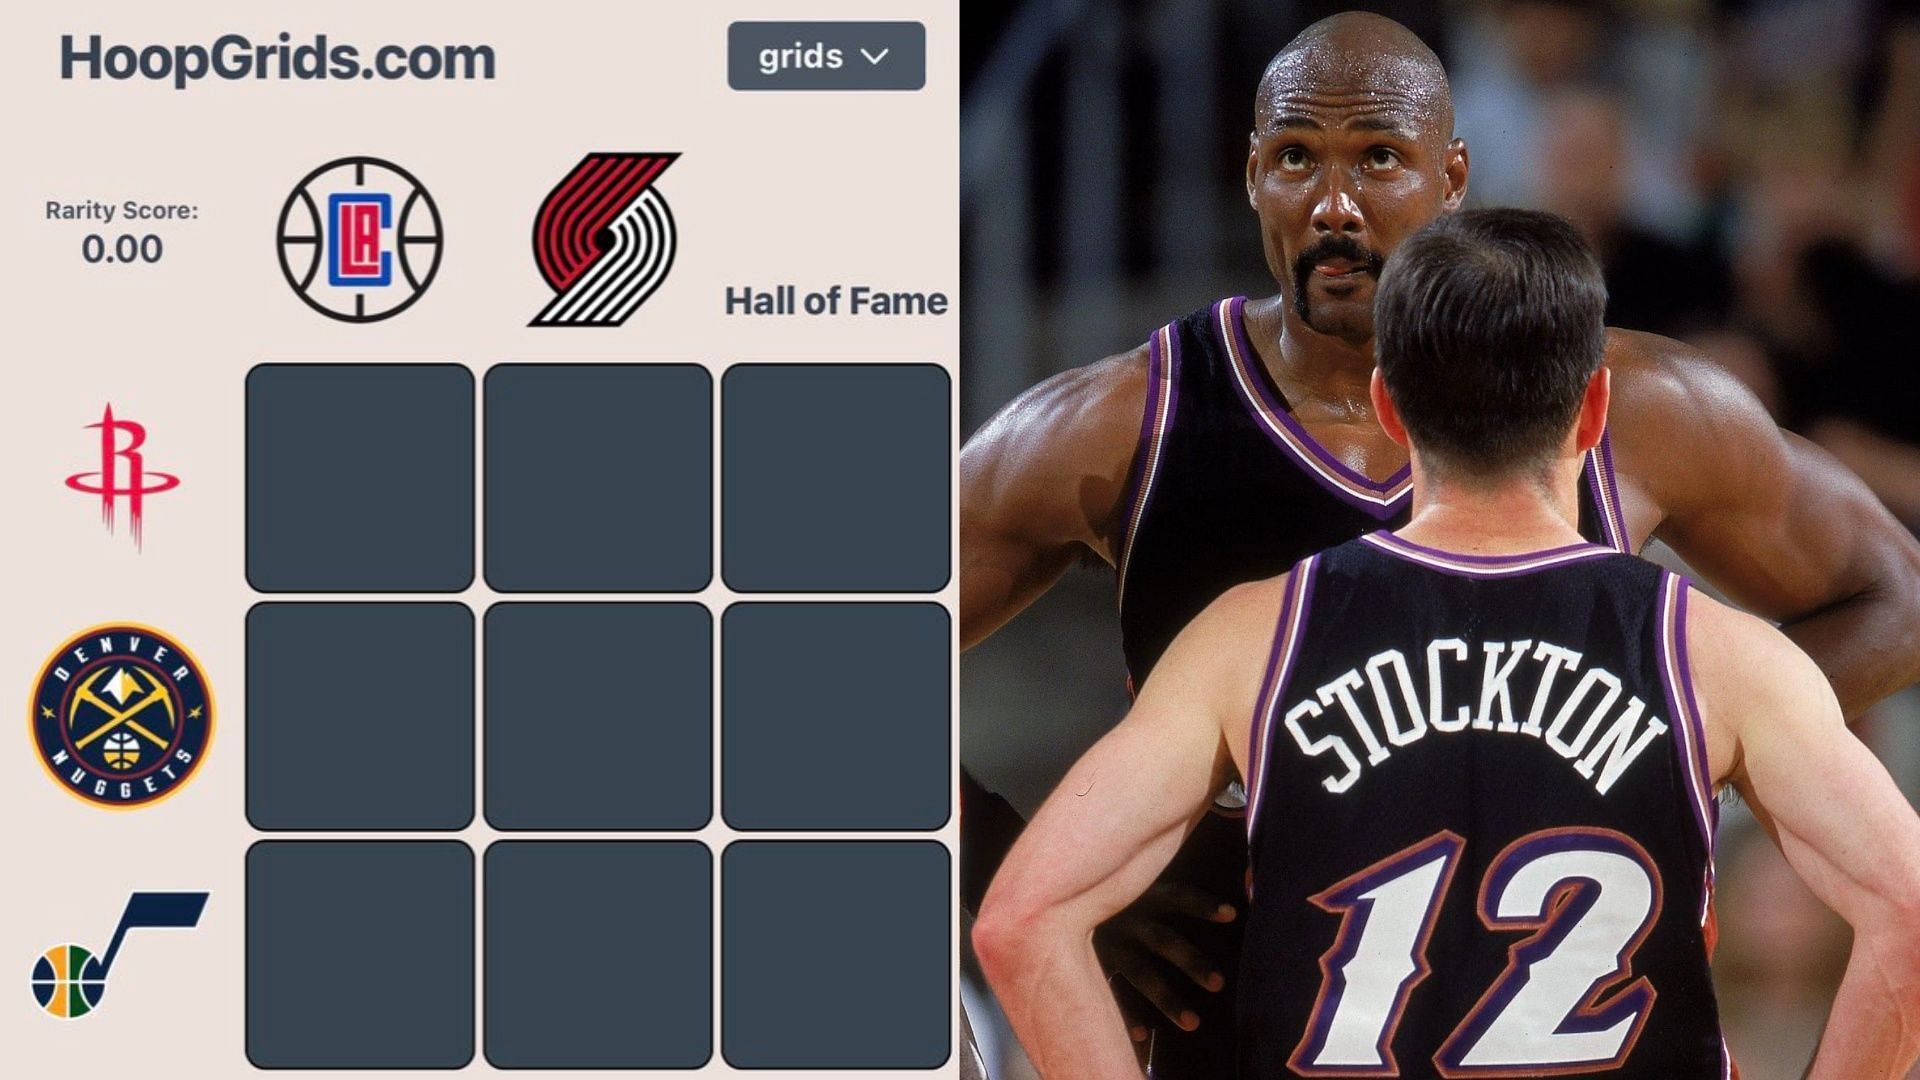 NBA HoopGrids (July 31), Karl Malone and John Stockton.